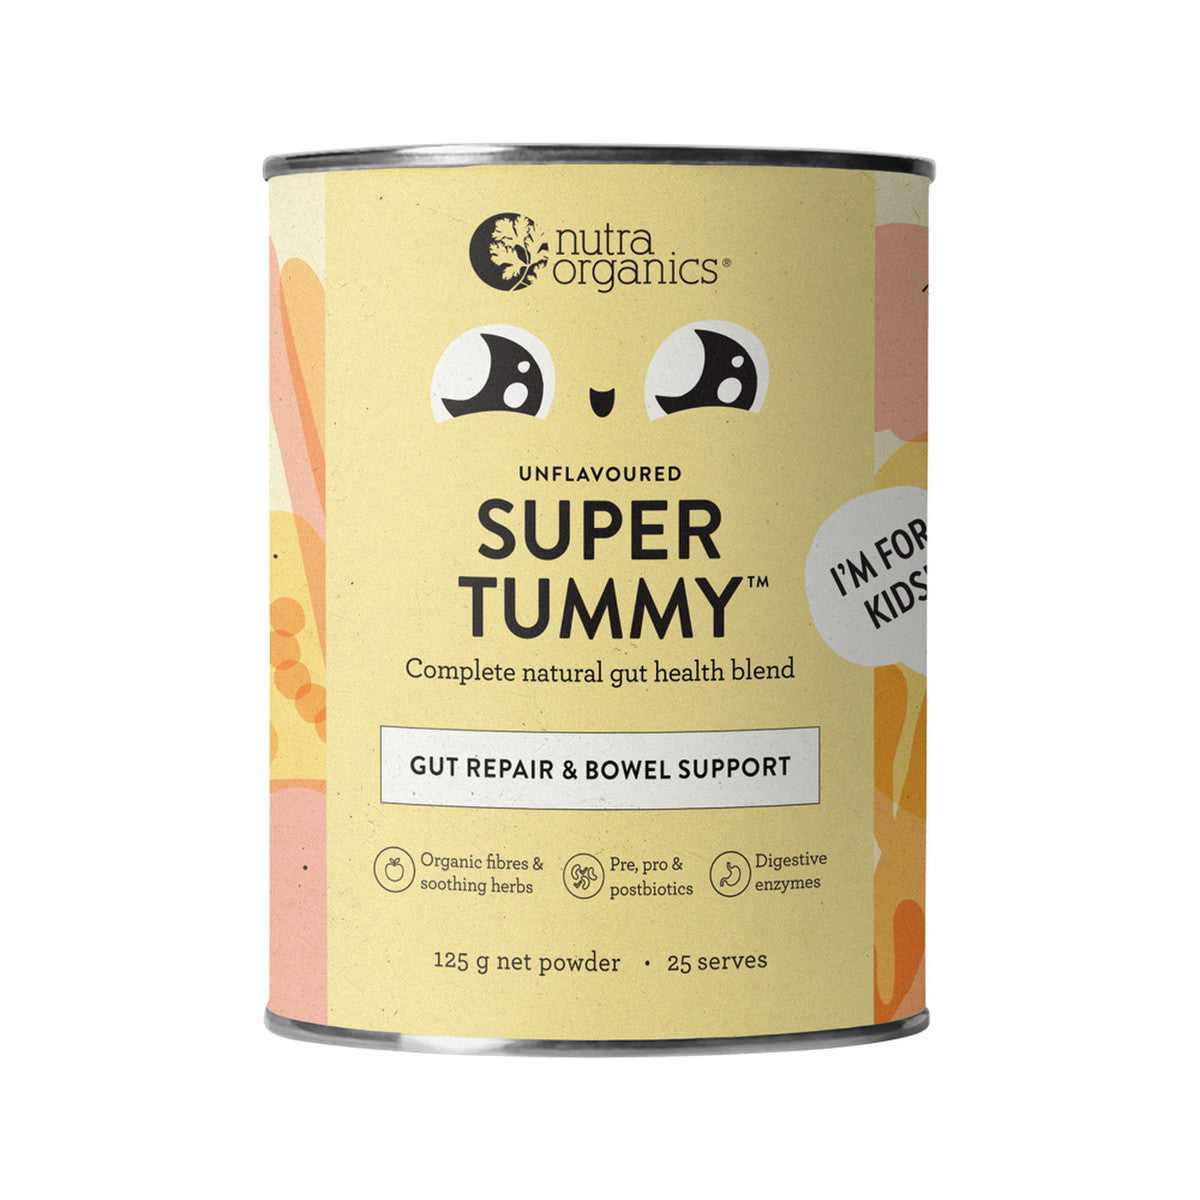 Nutra Organics - Super Tummy Unflavoured